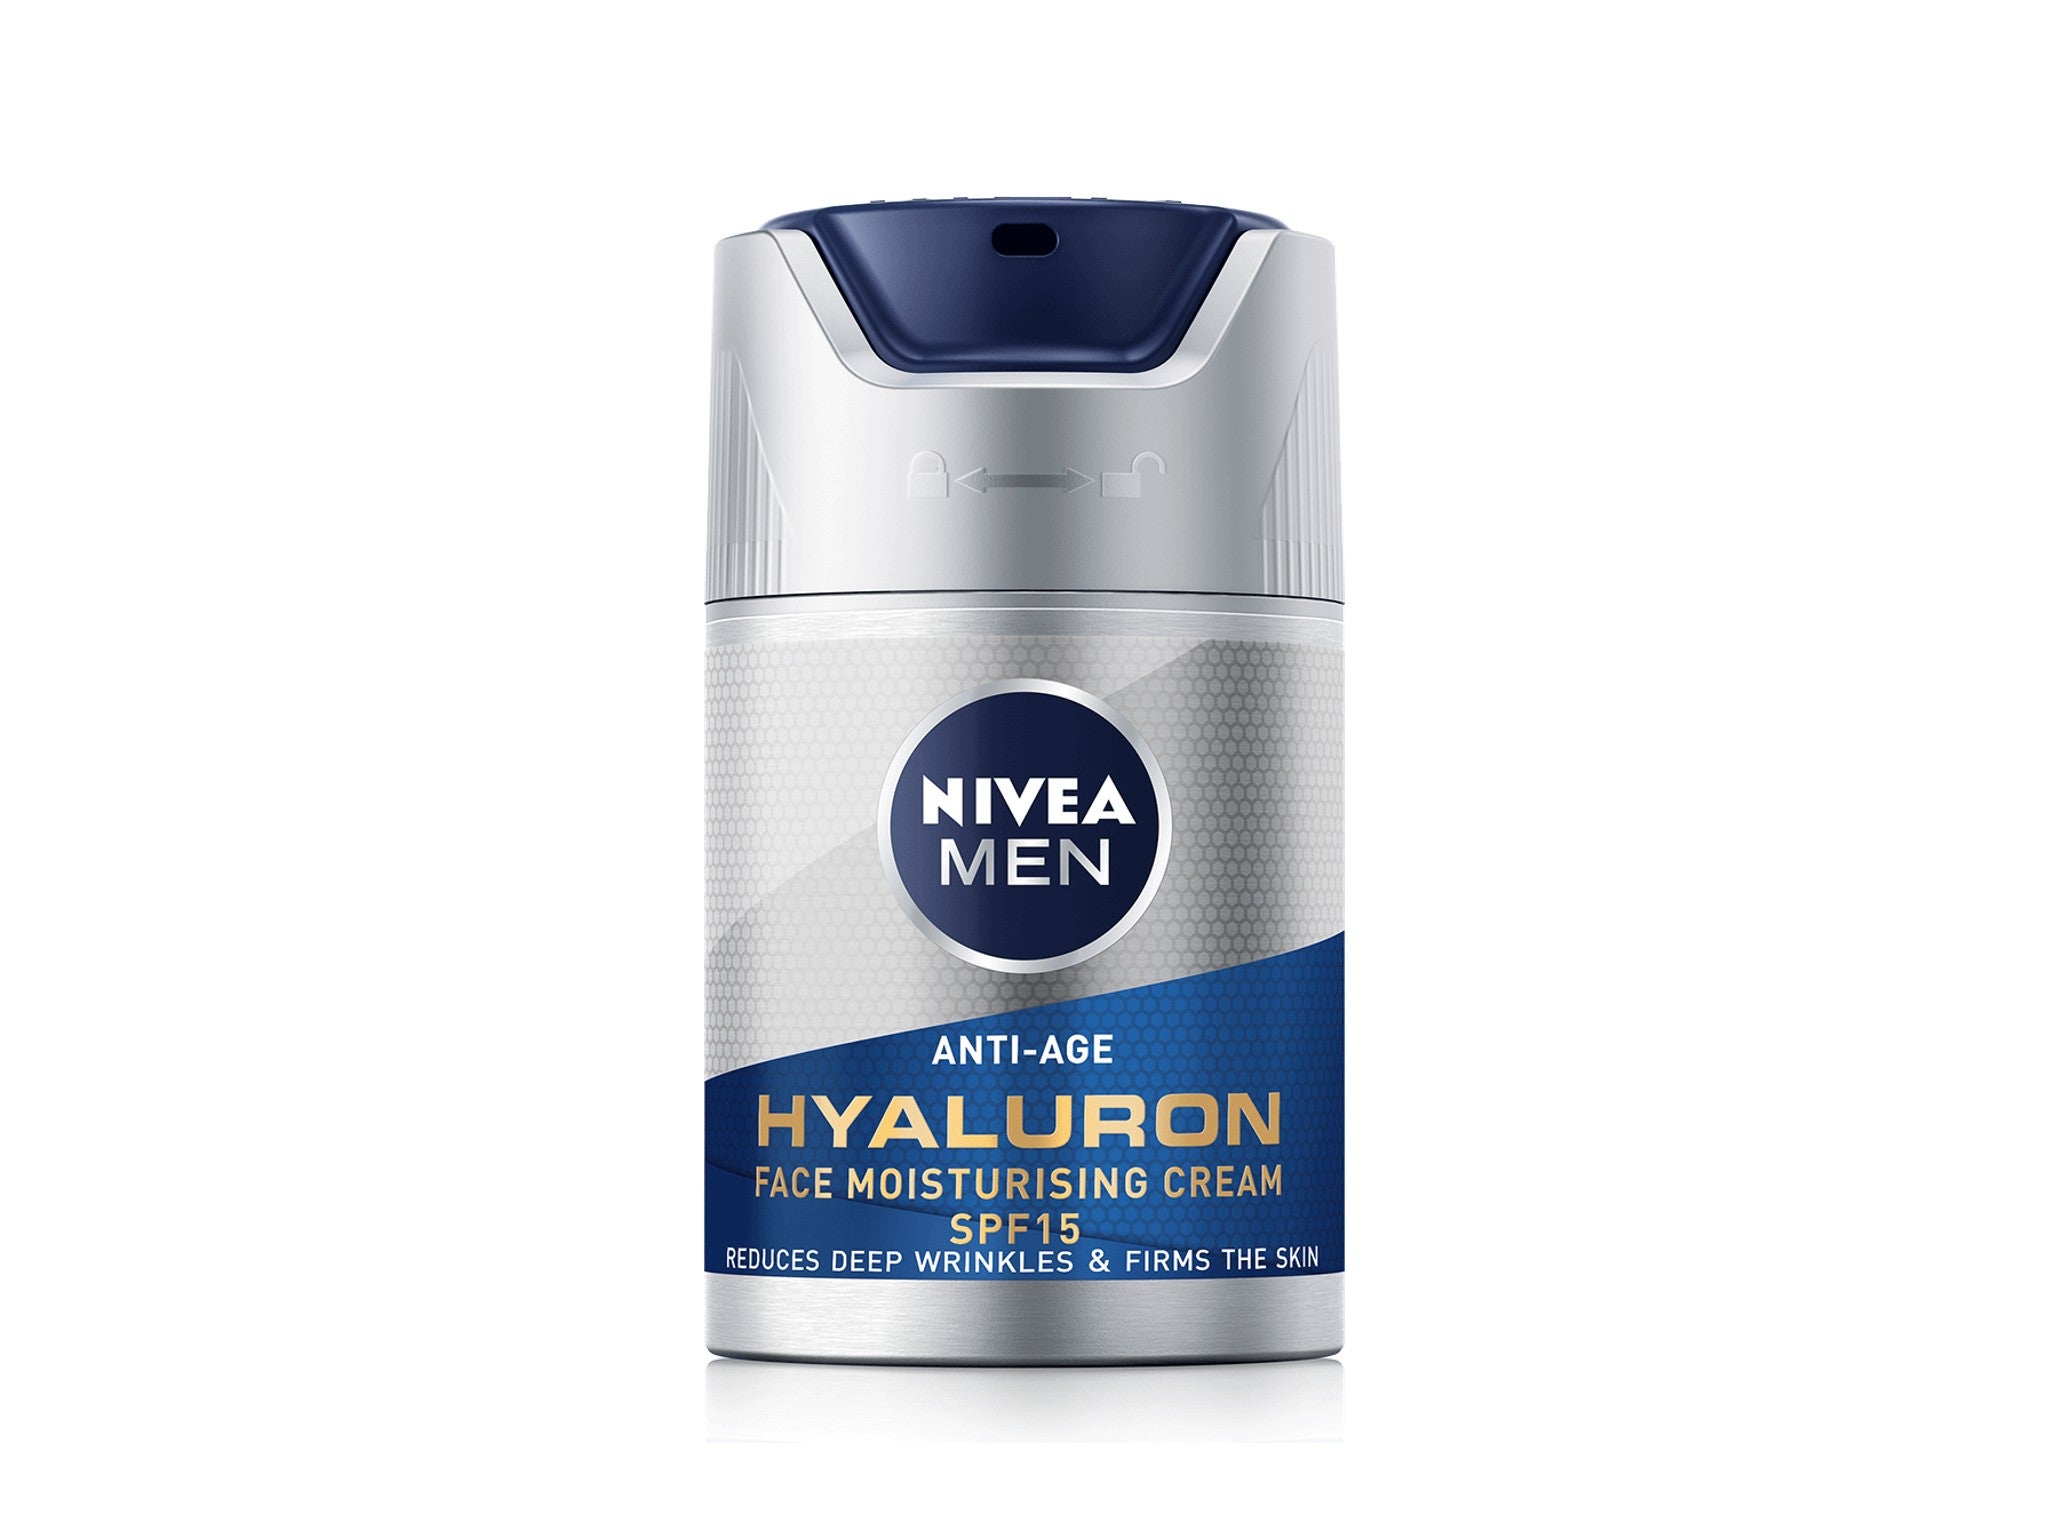 Nivea men anti-age hyaluron face moisturising cream SPF15 indybest